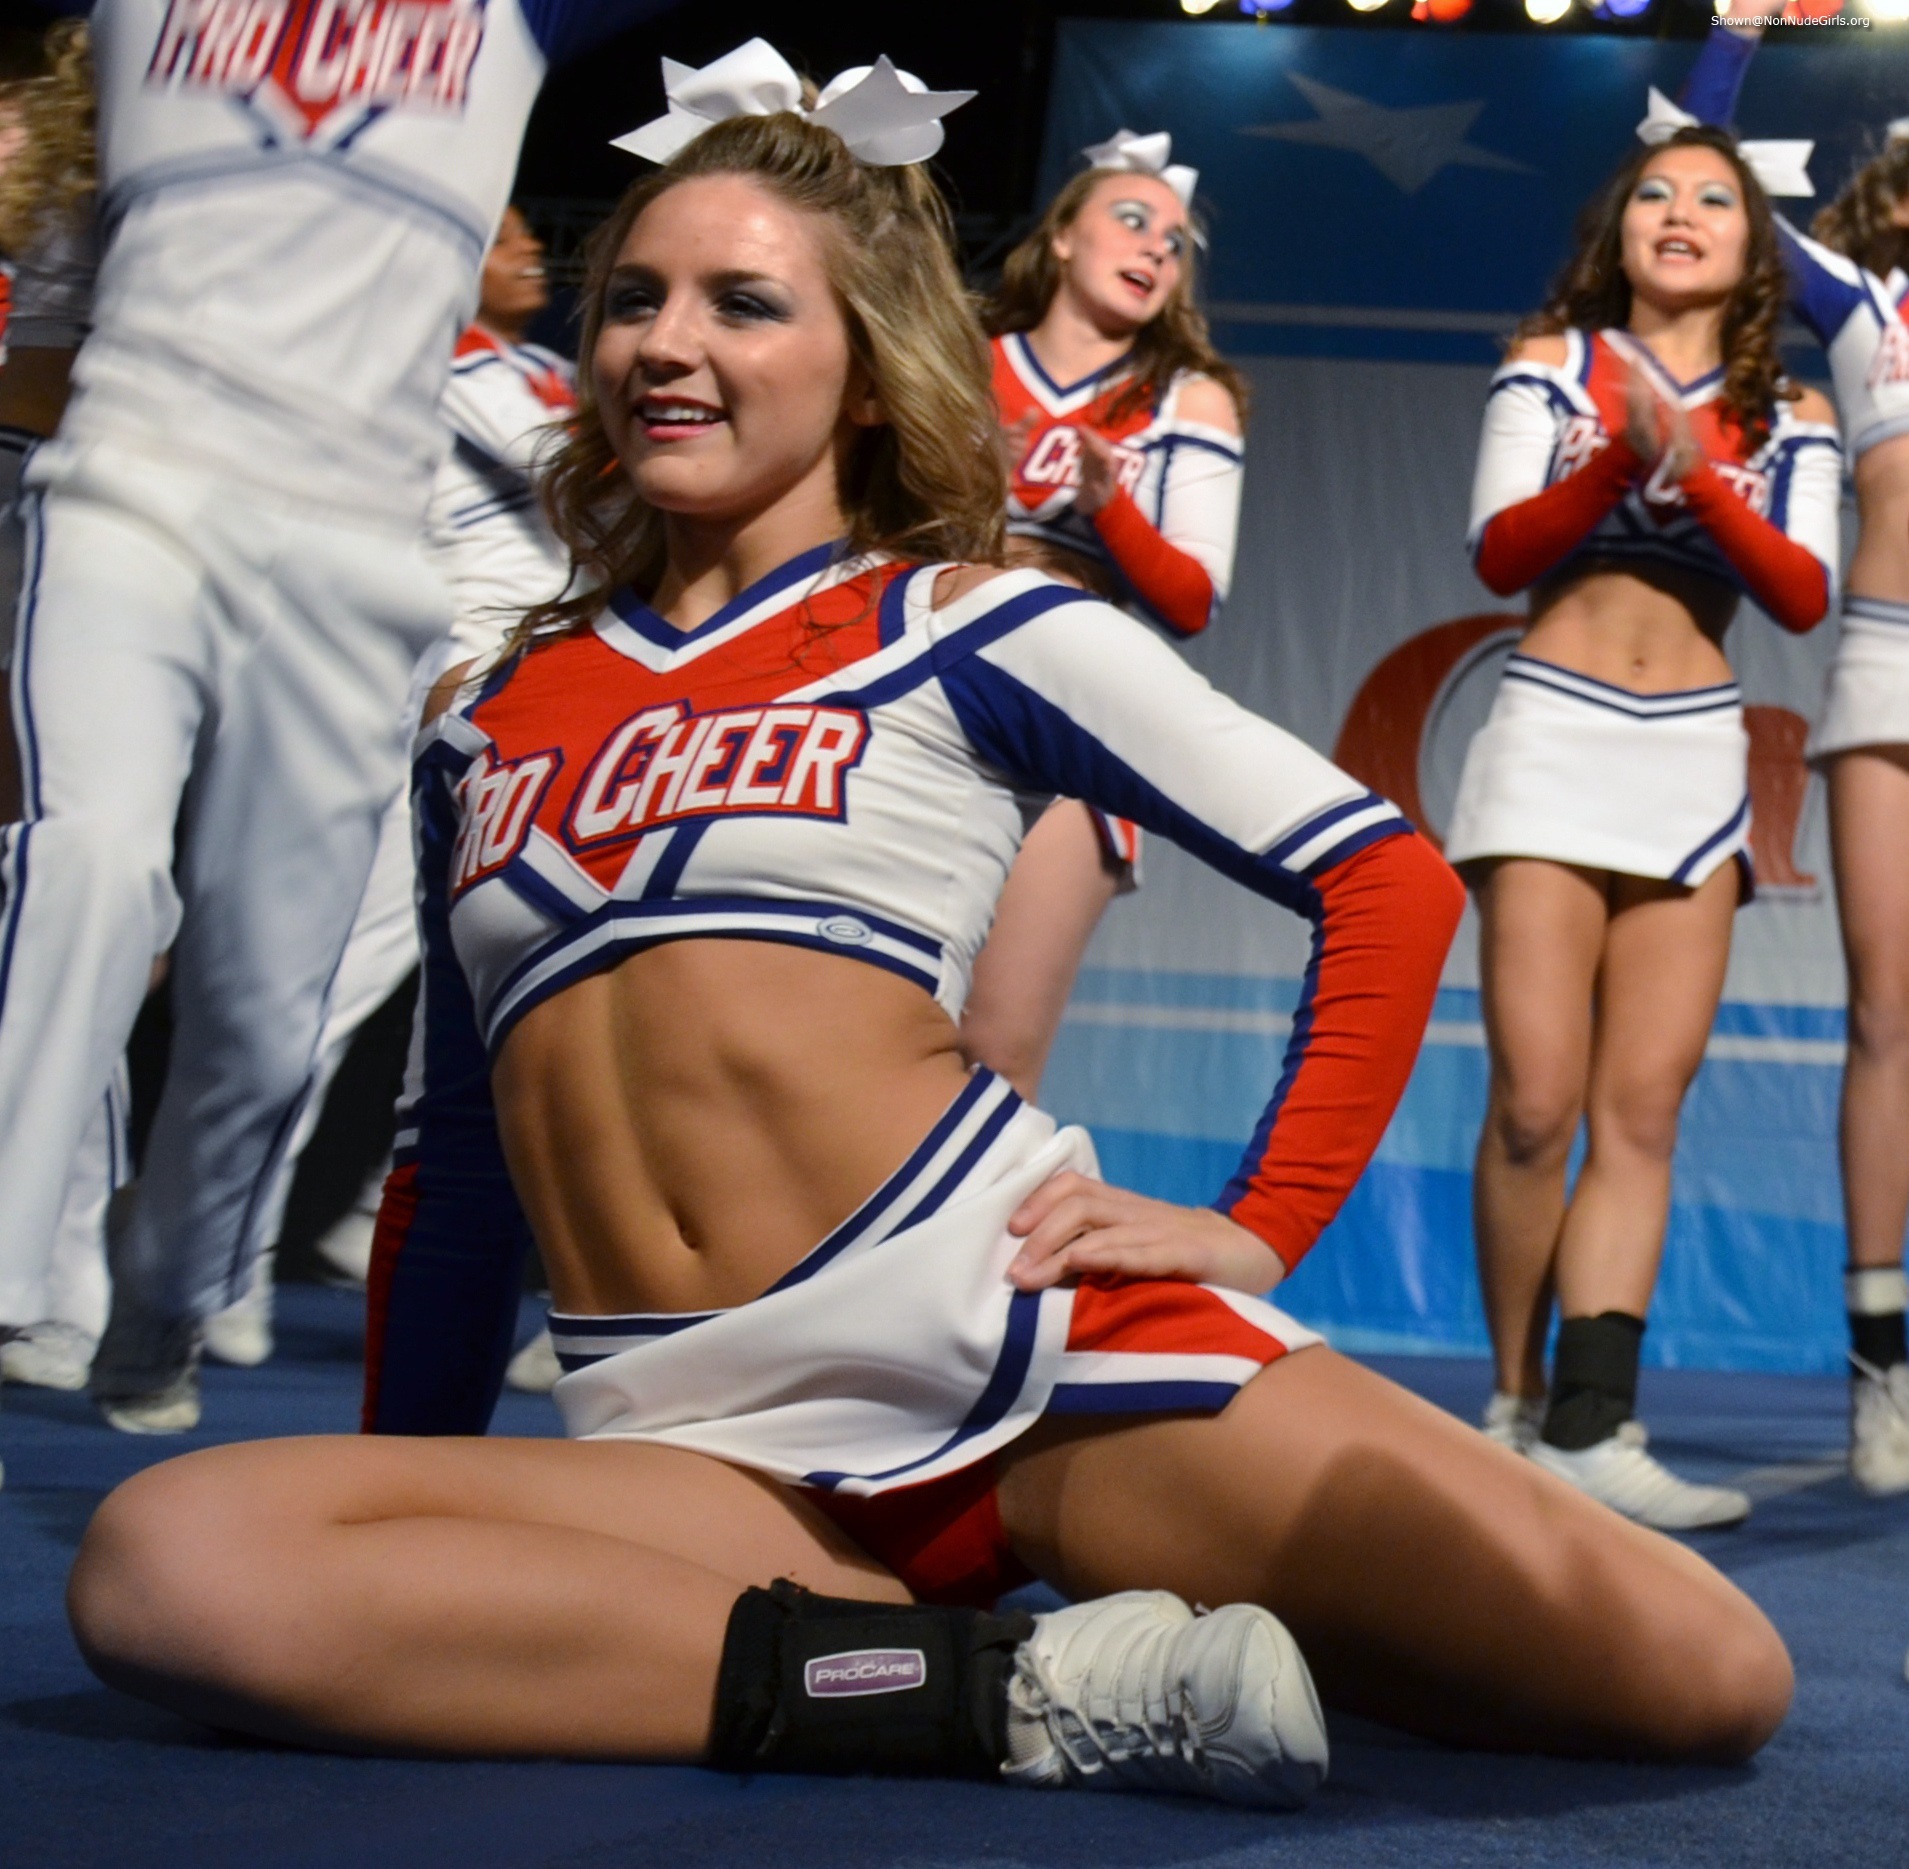 ashley suddarth share college cheerleaders up skirt photos